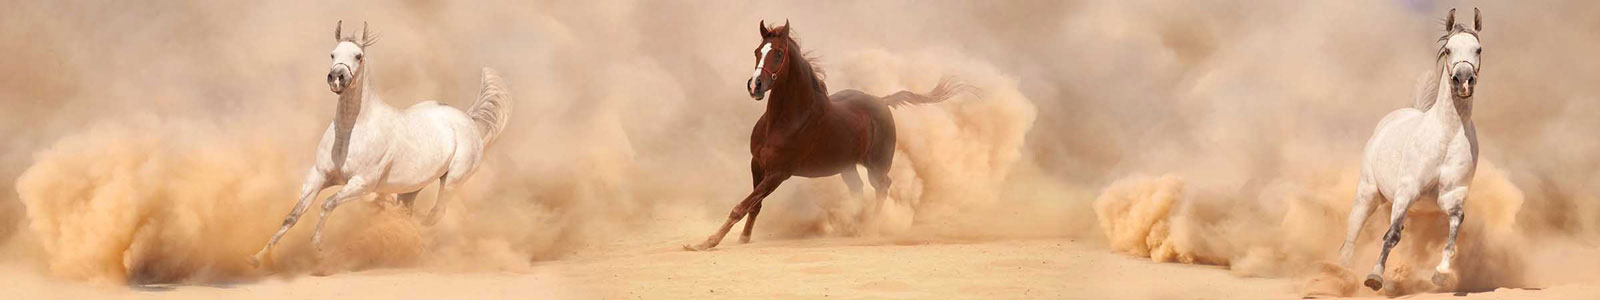 №3299 - Арабские лошади